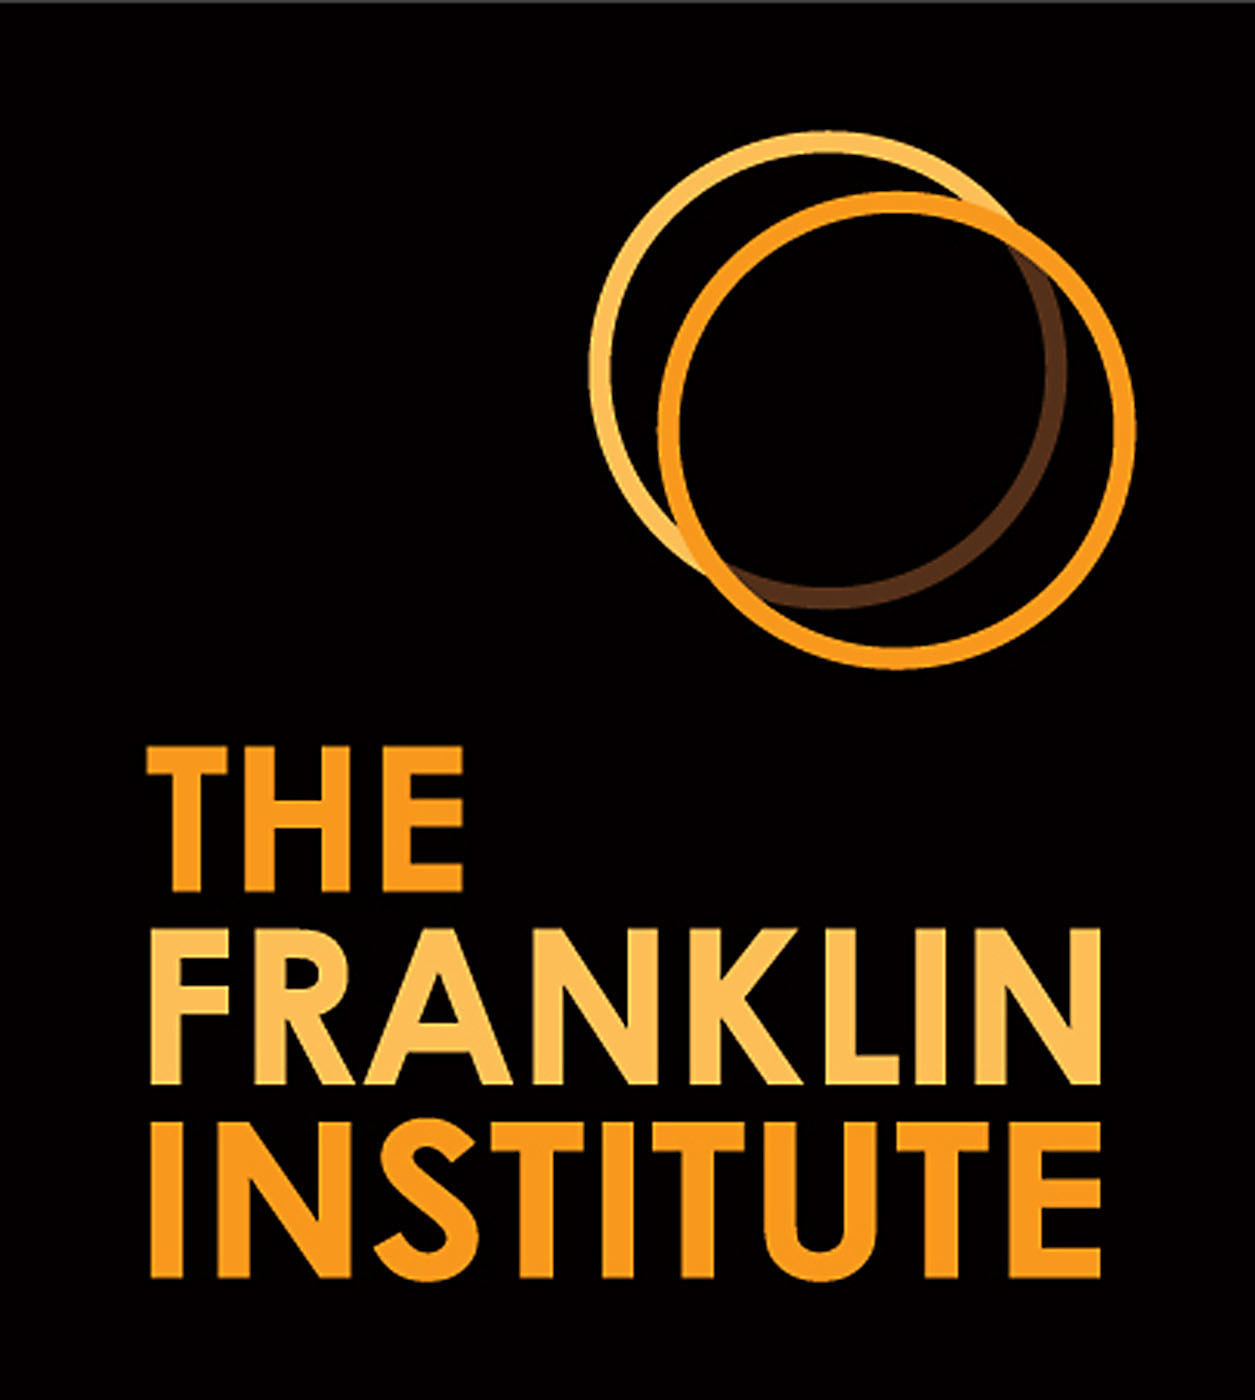 The Franklin Institute.